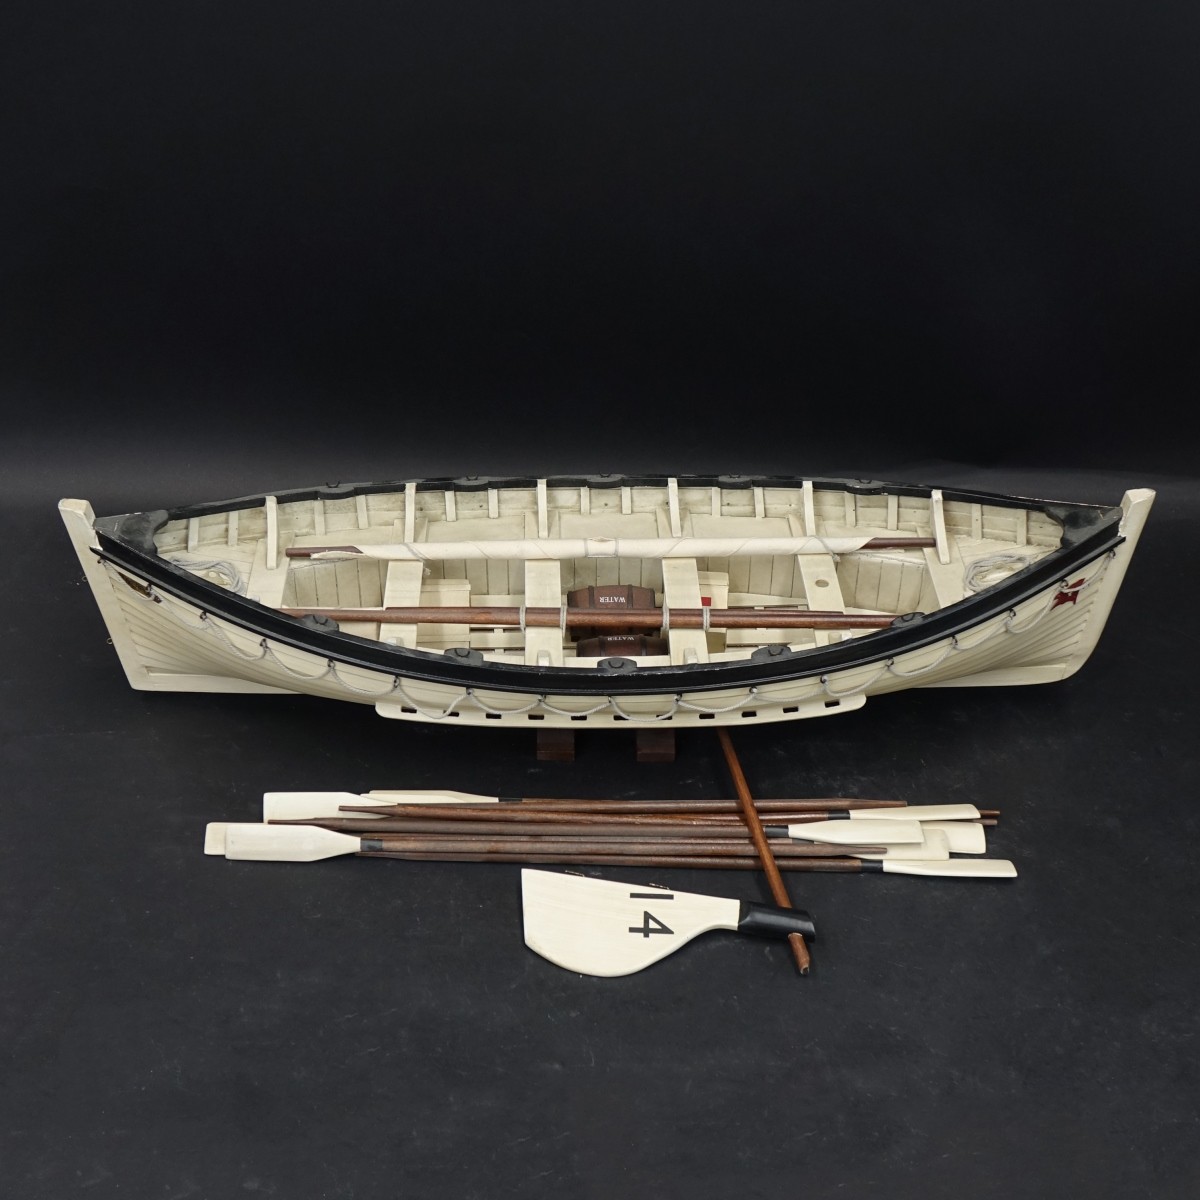 Liverpool #14 Model Row Boat